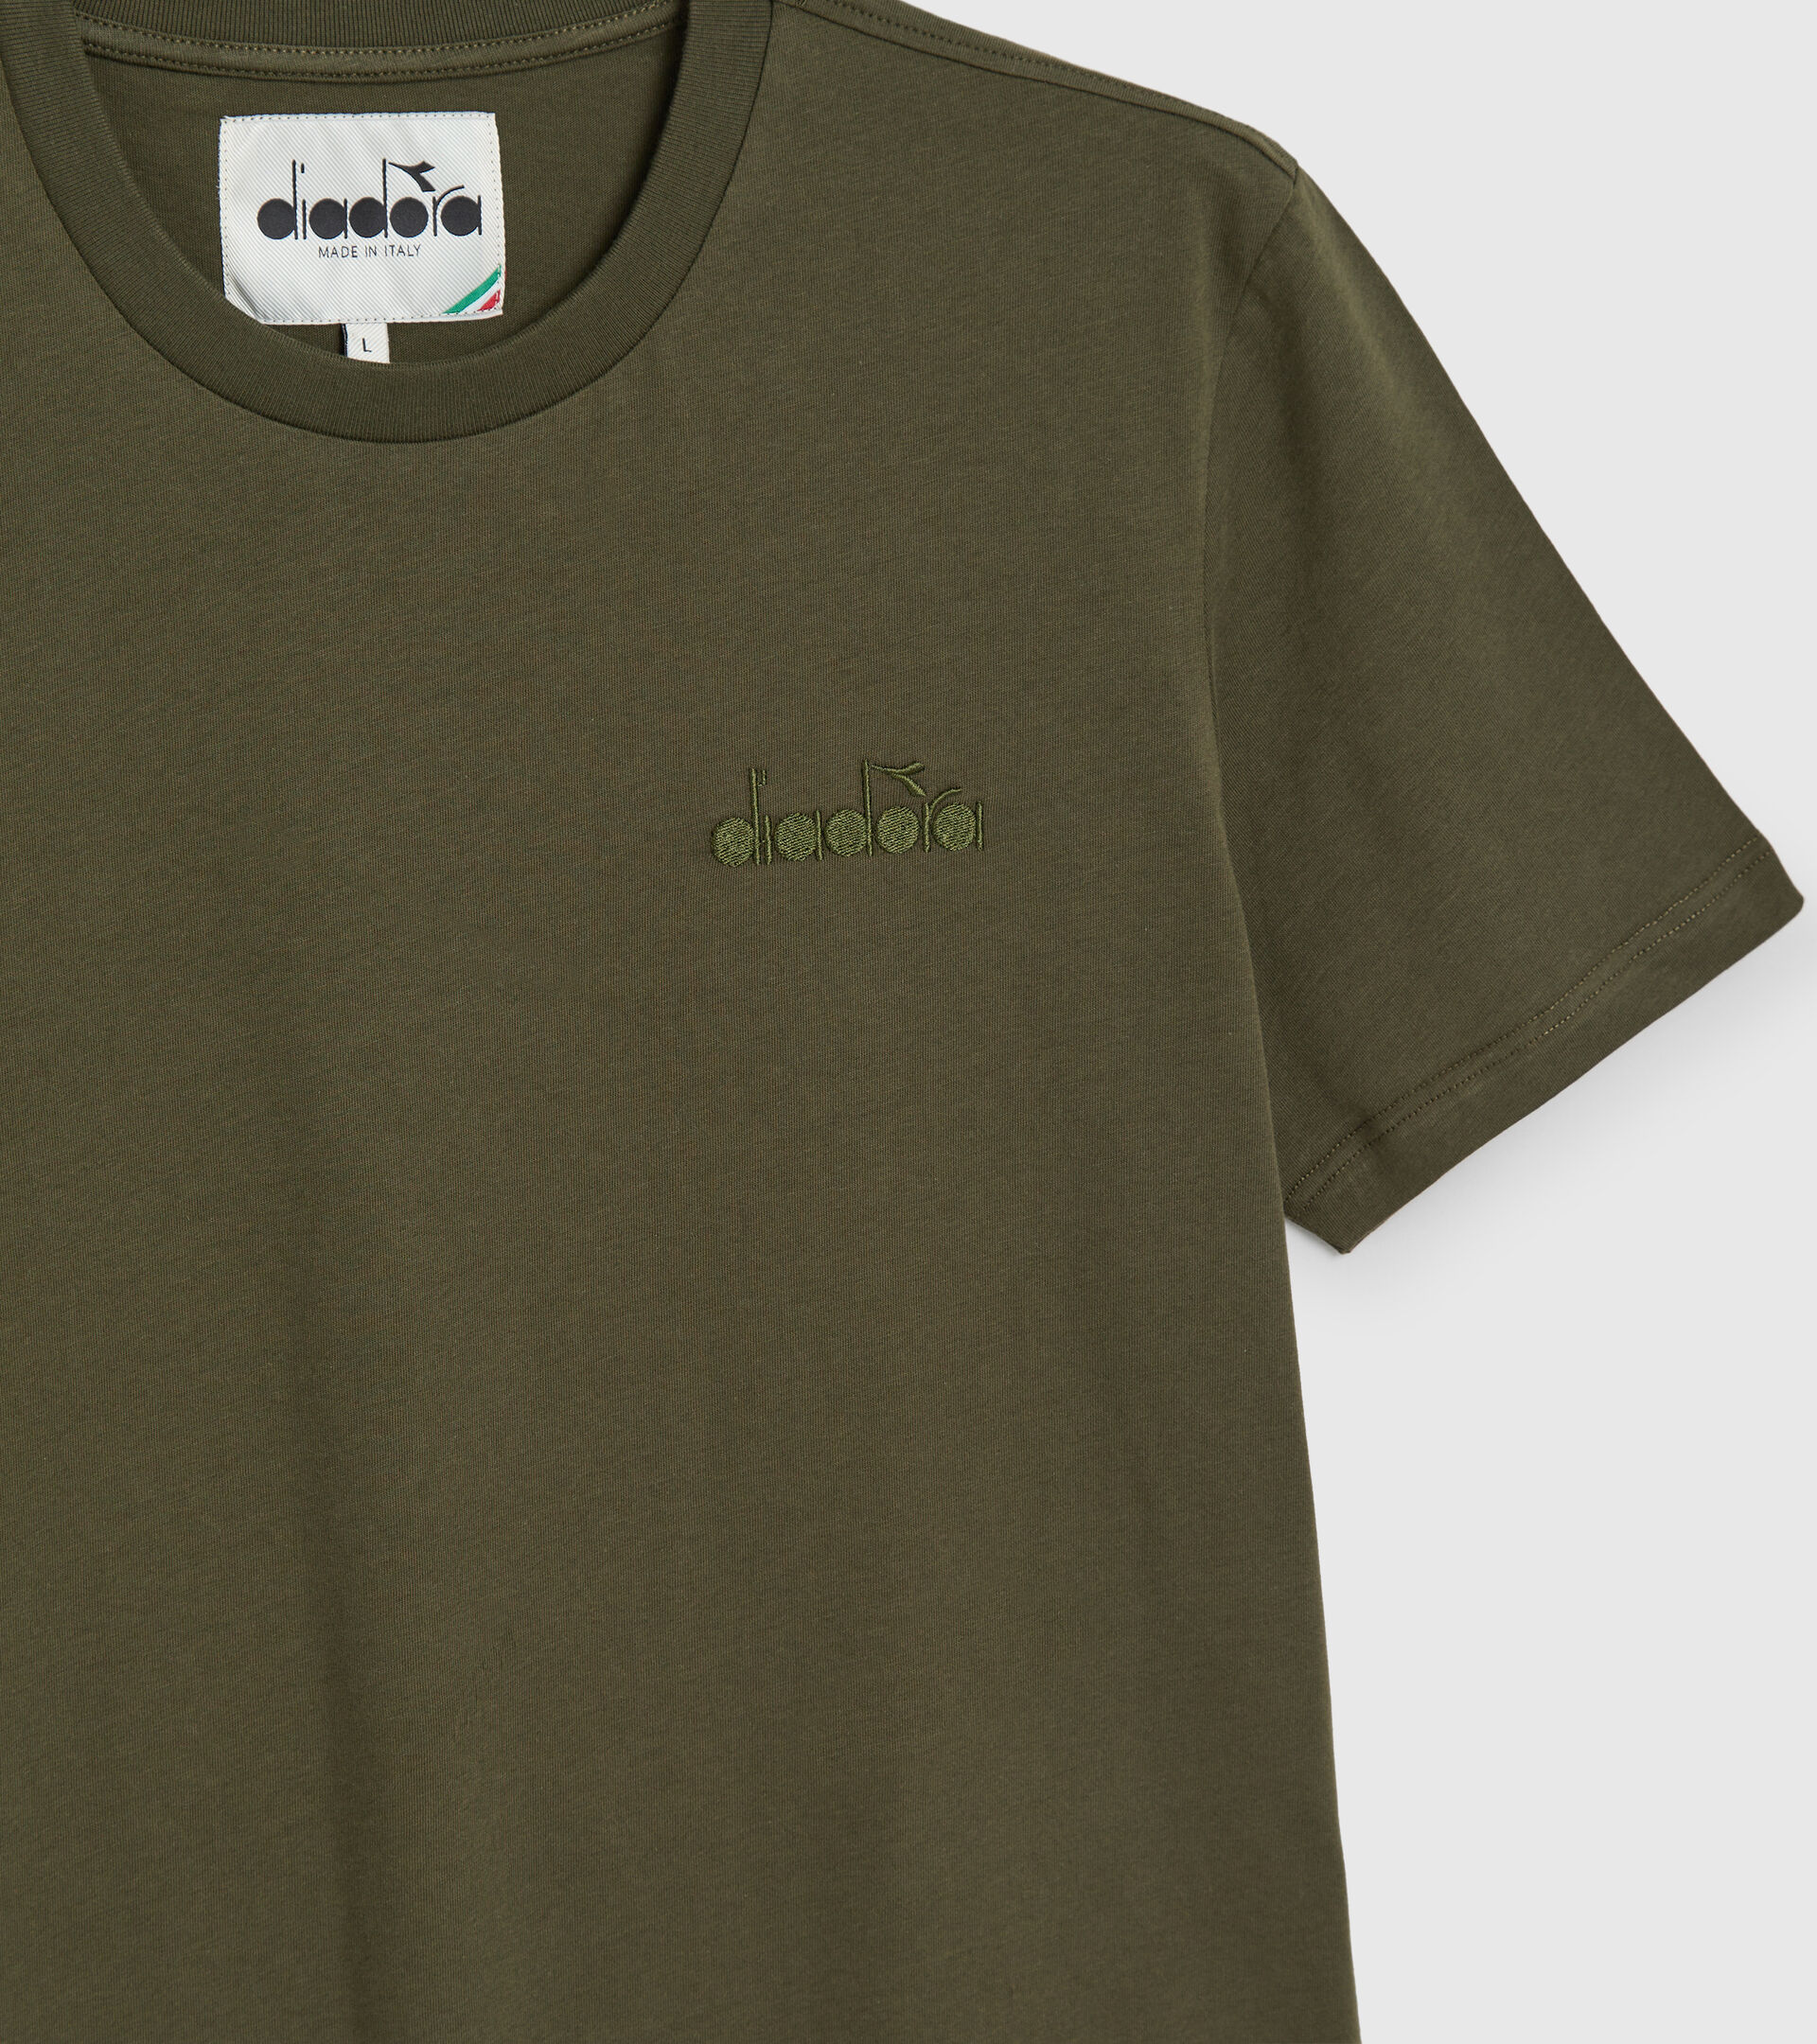 Cotton T-shirt - Made in Italy - Men T-SHIRT SS MII GREEN MILITARY - Diadora